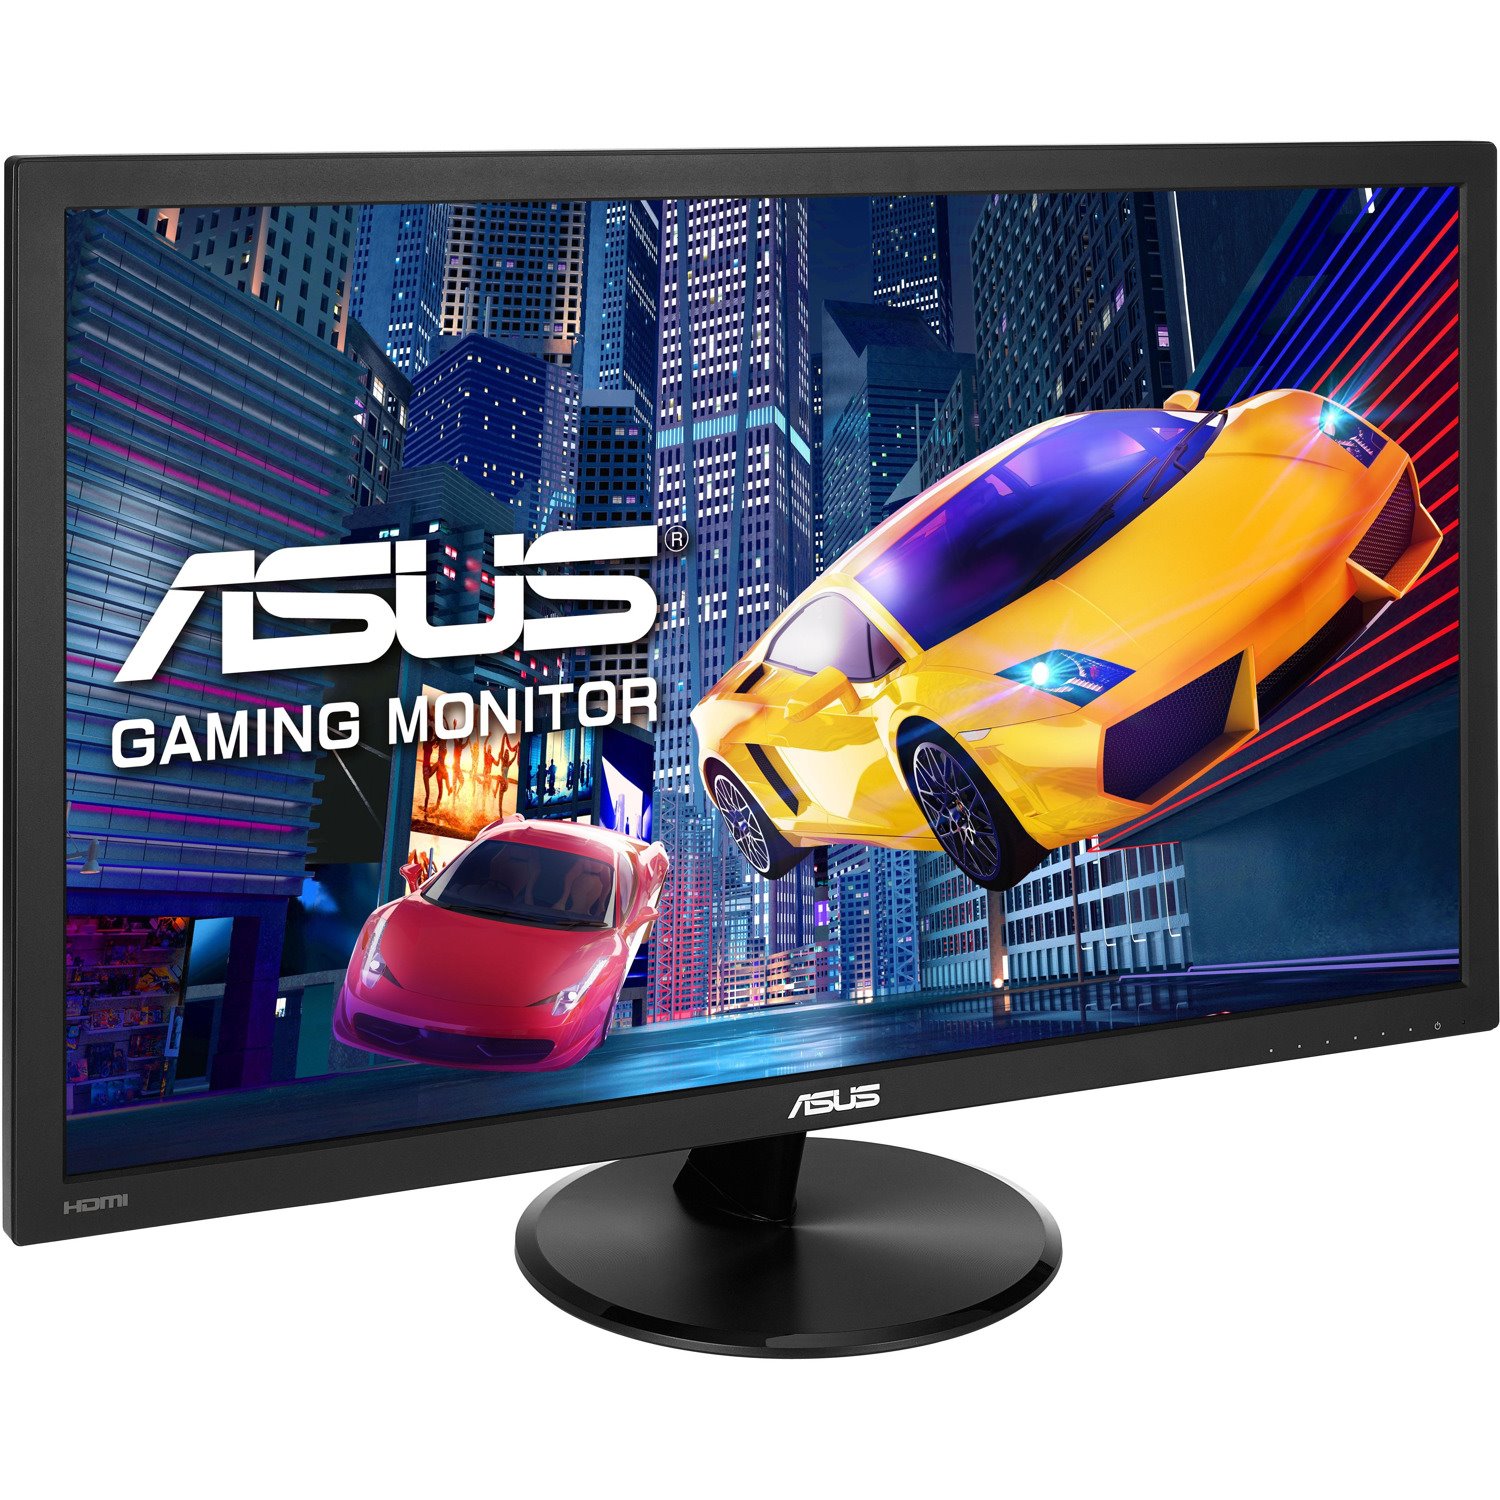 Asus VP228HE 22" Class Full HD LCD Monitor - 16:9 - Black